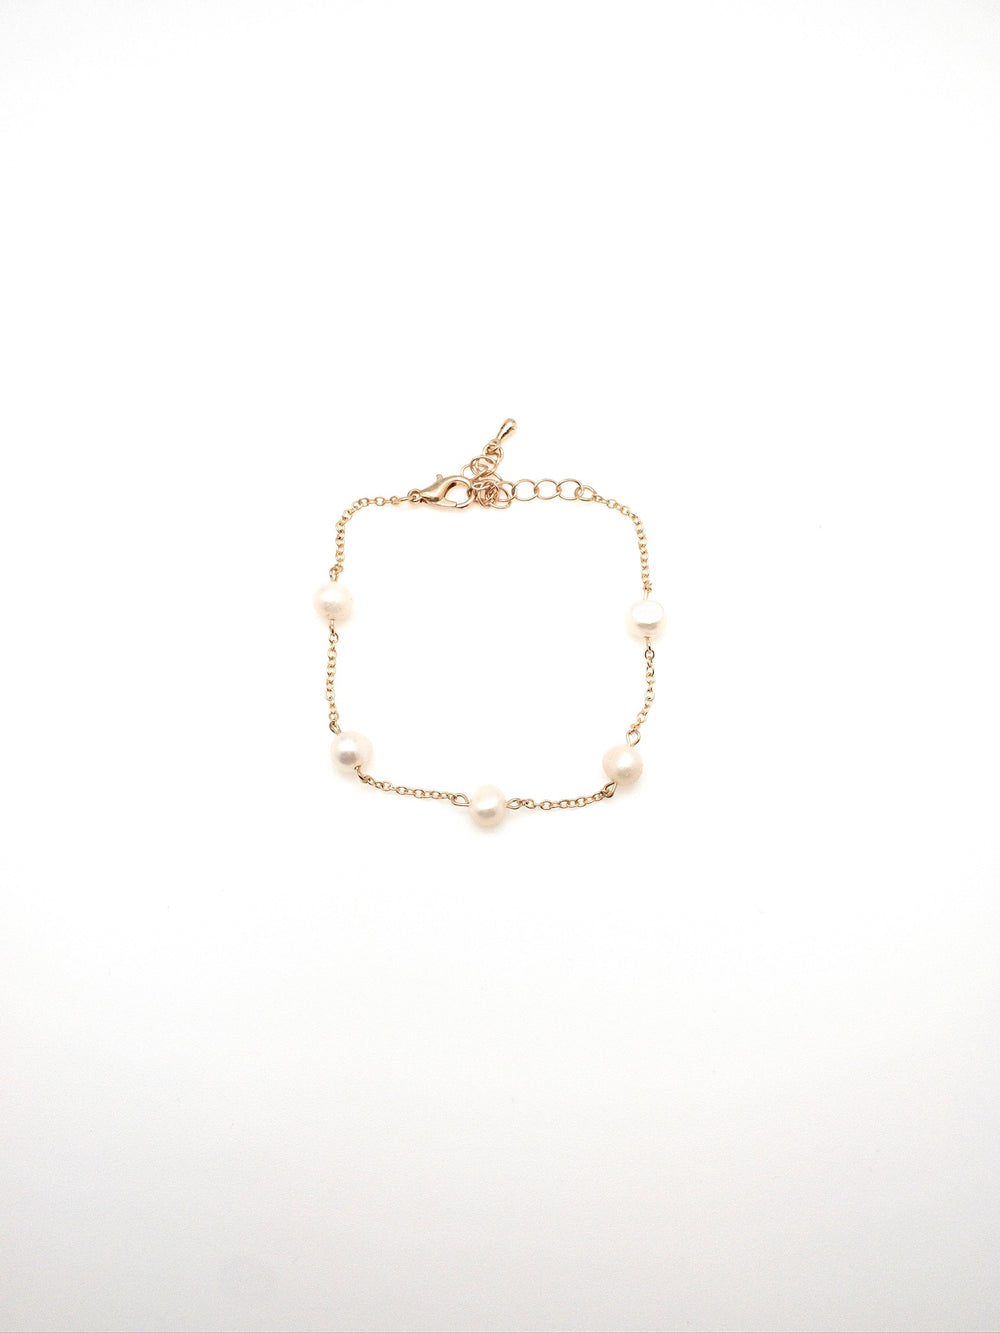 Scattered pearls on gold chain bracelet adjustable 